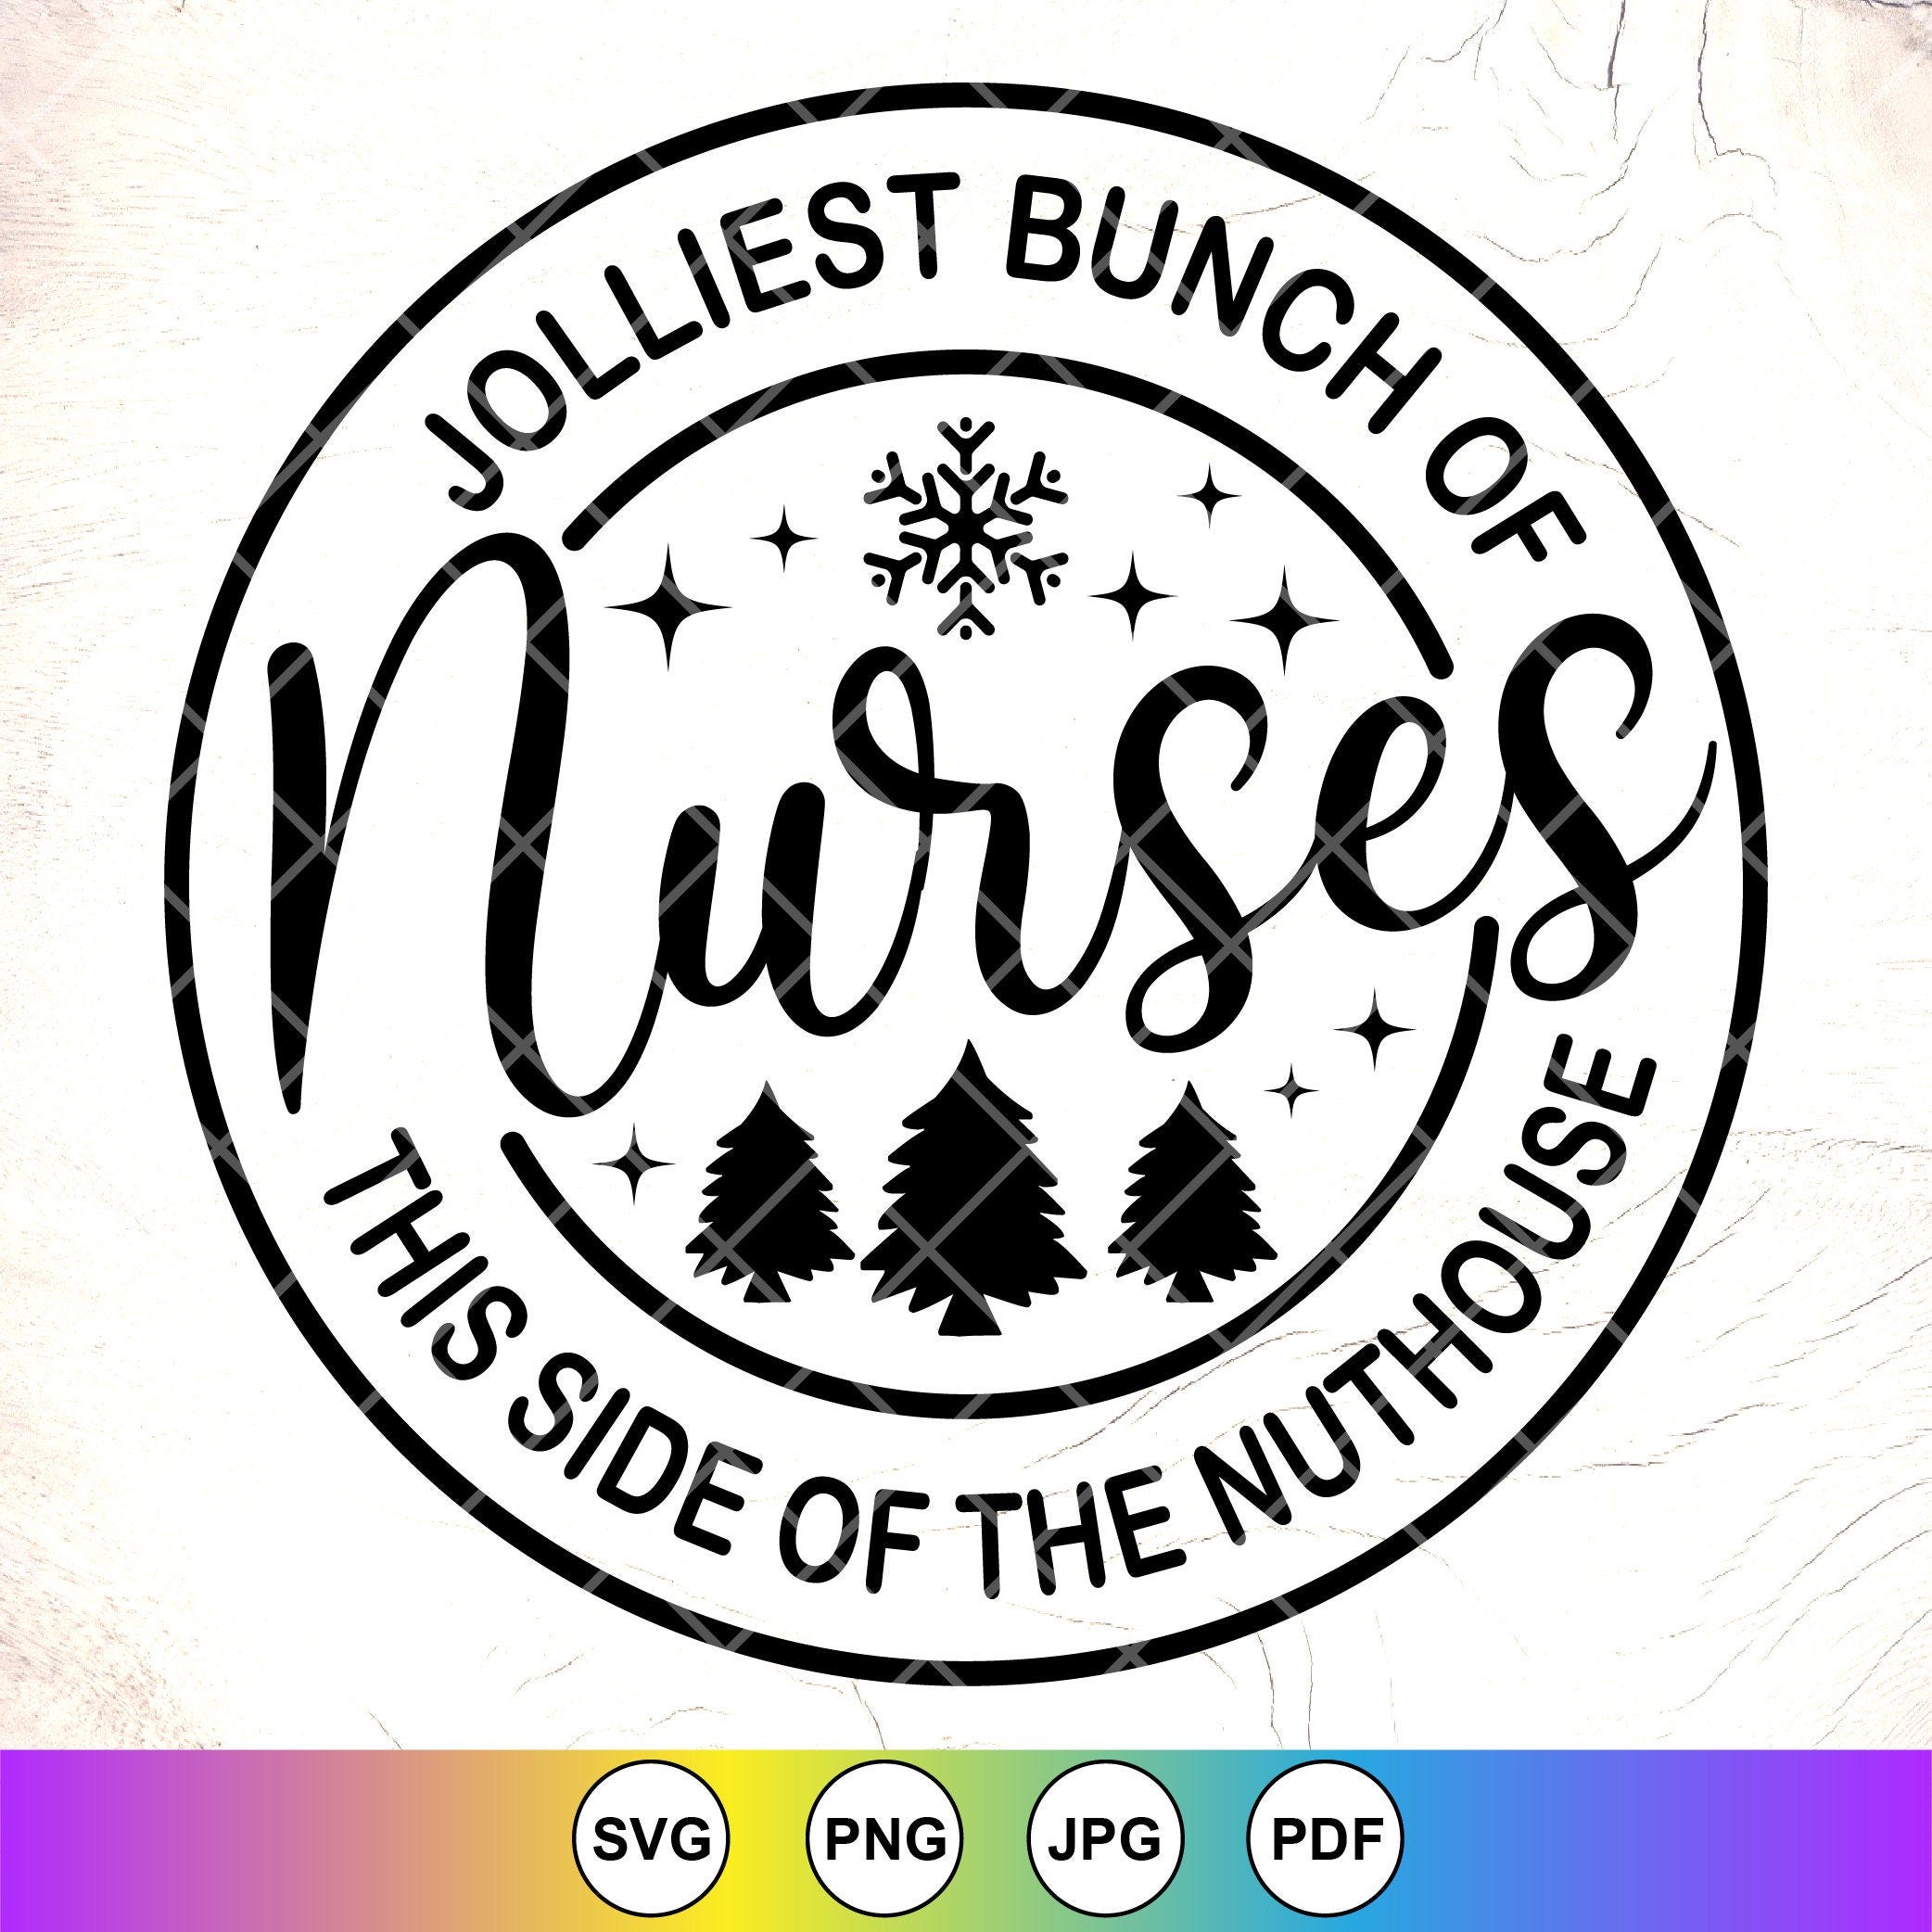 Jolliest Bunch of Nurses SVG,Christmas Nurse Svg,Funny Christmas svg,Xmas Movie svg,Christmas ornament svg,Instant Download Files for Cricut